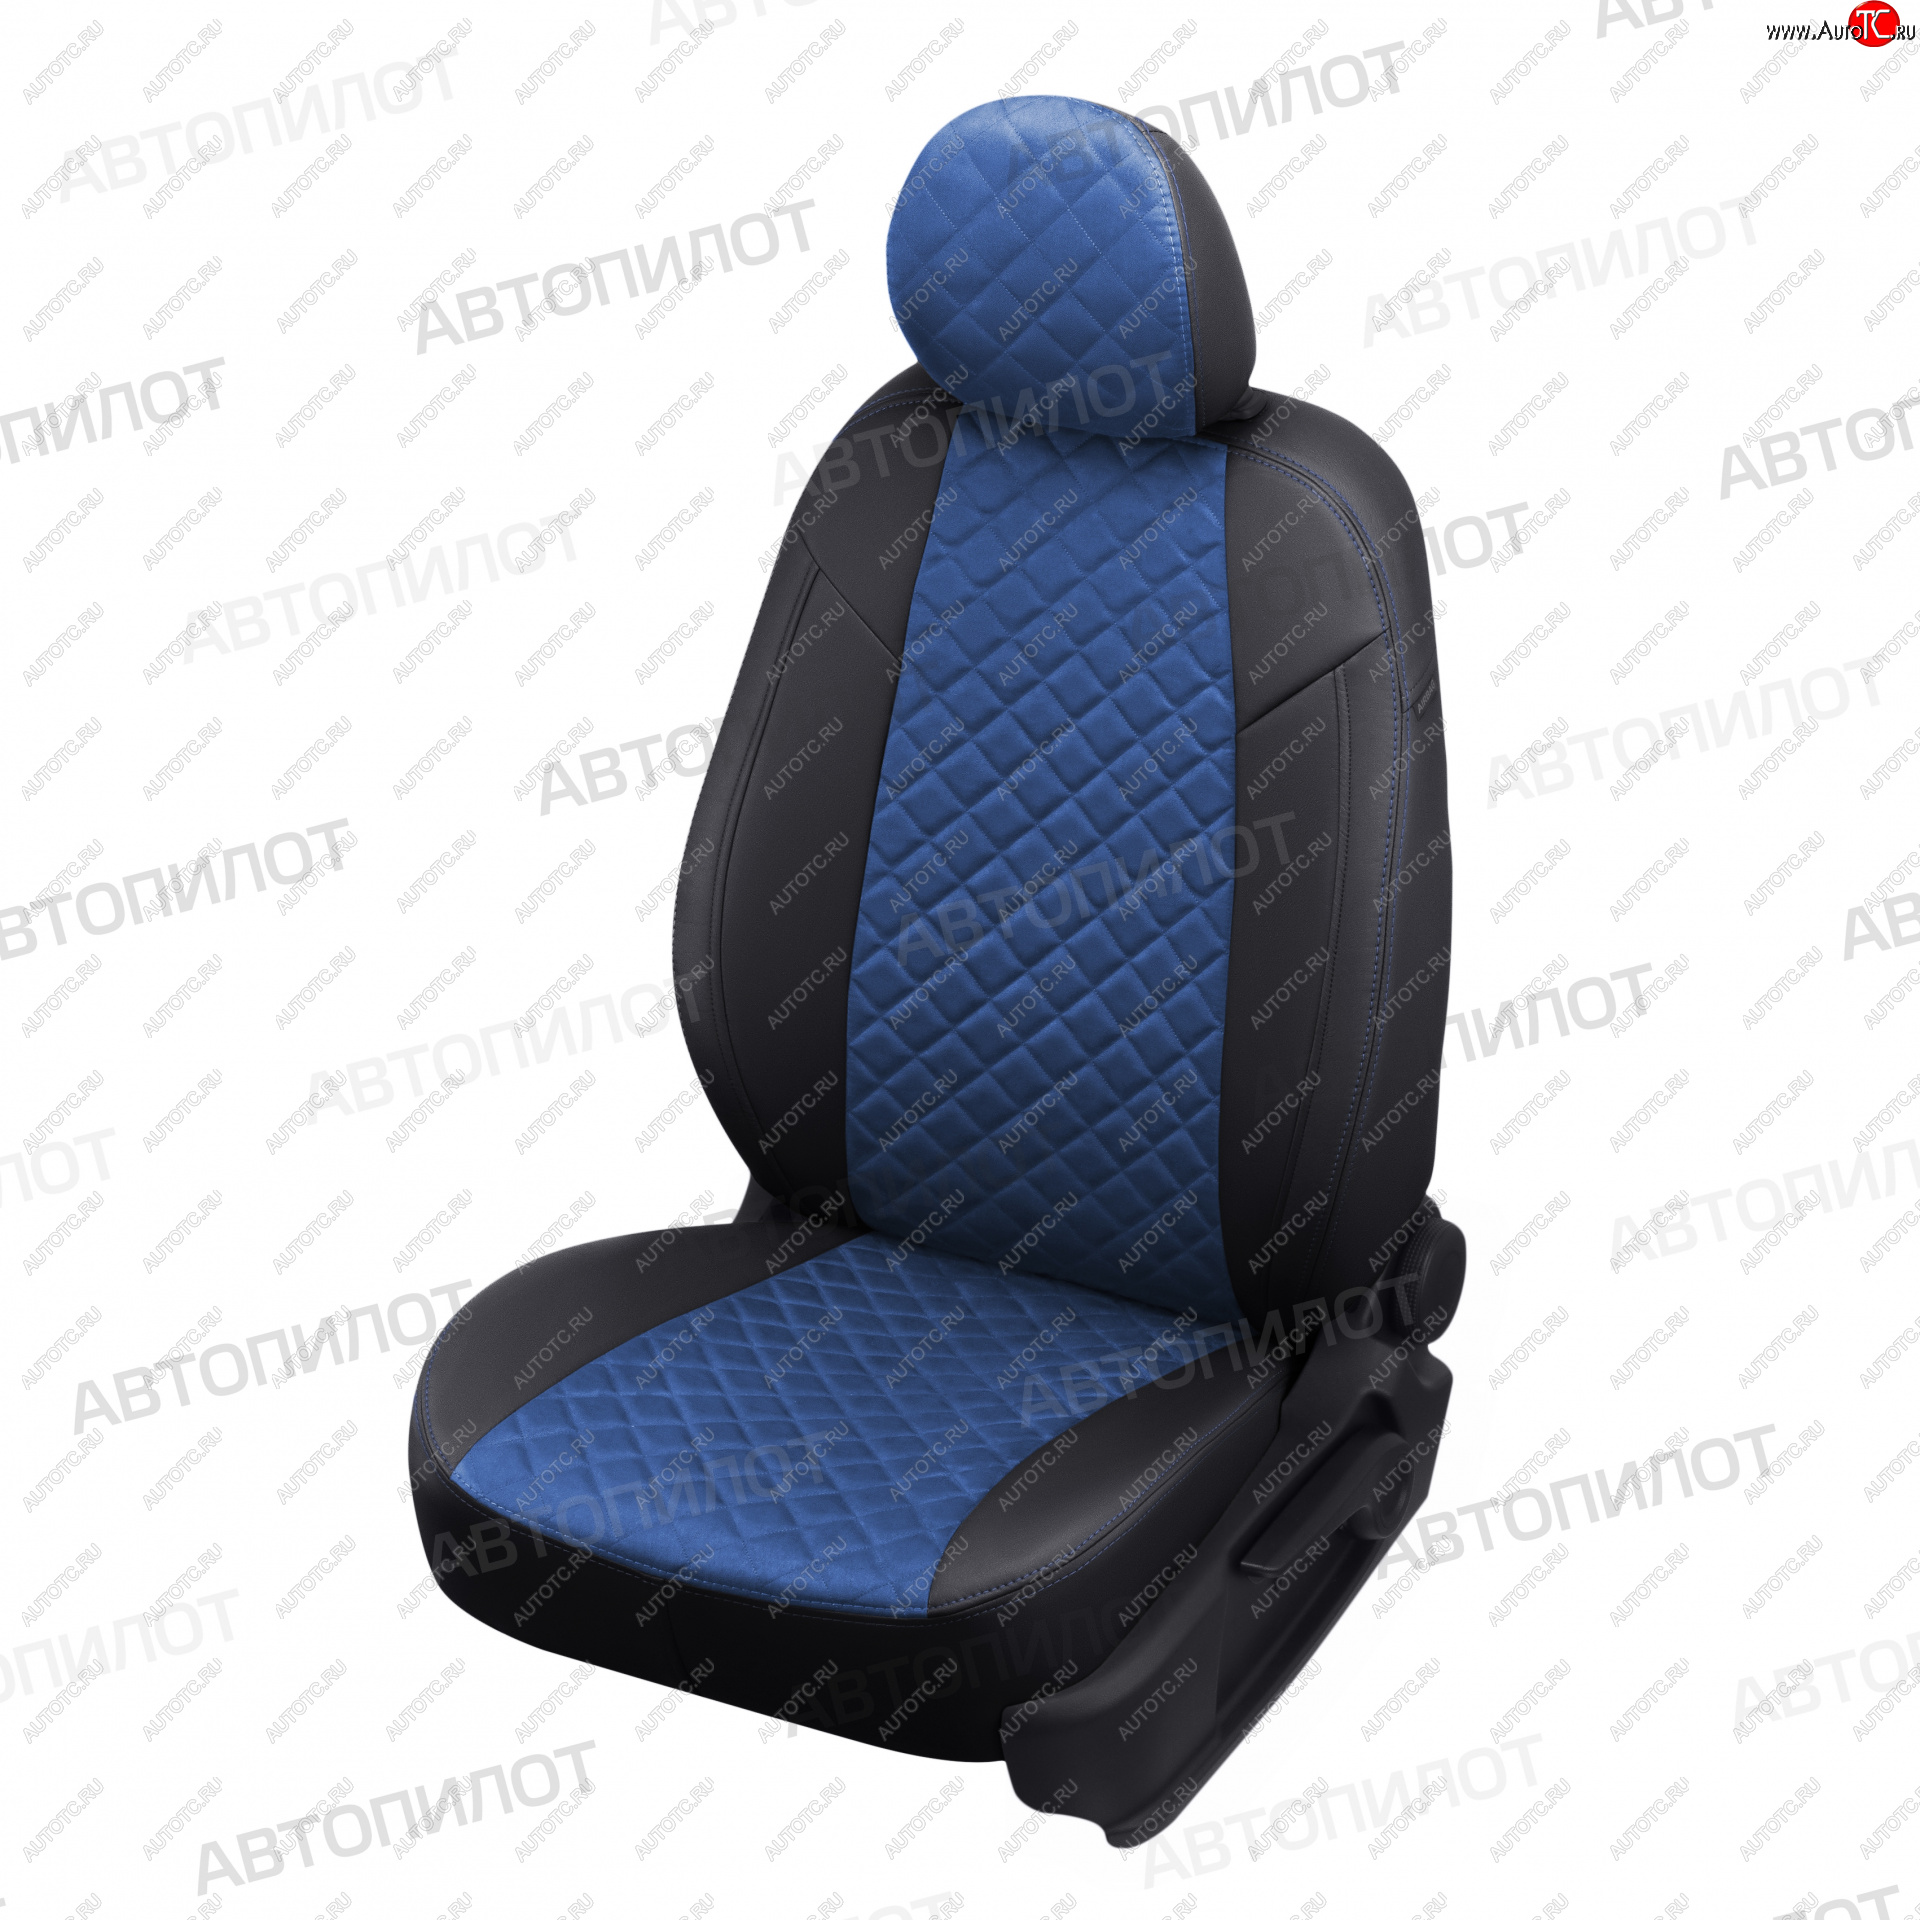 13 999 р. Чехлы сидений (экокожа/алькантара, спл. з. сп.) Автопилот Ромб  BMW 3 серия  E36 (1990-2000) (черный/синий)